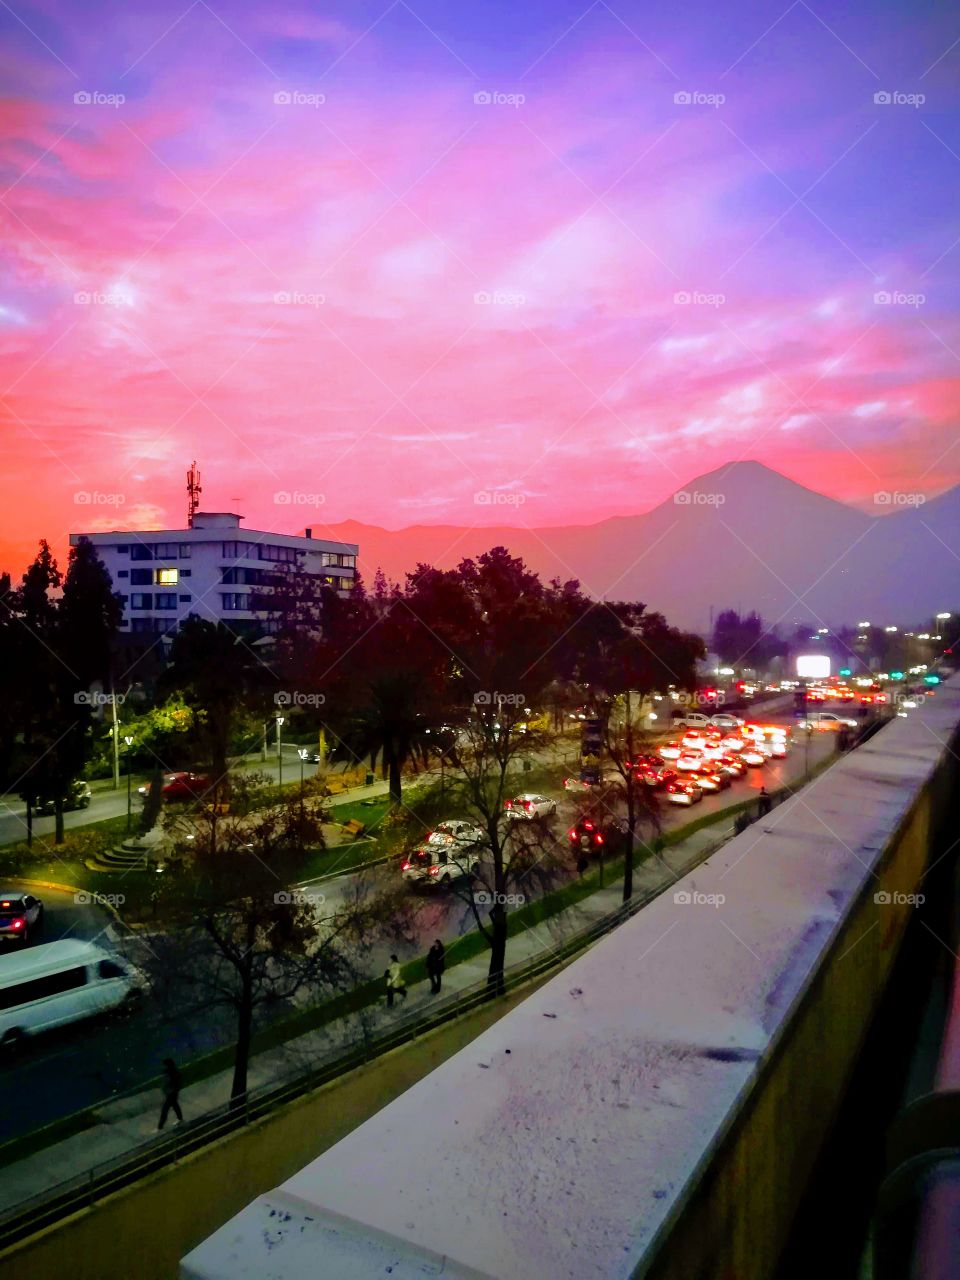 Sunset is here, Santiago de Chile
💜